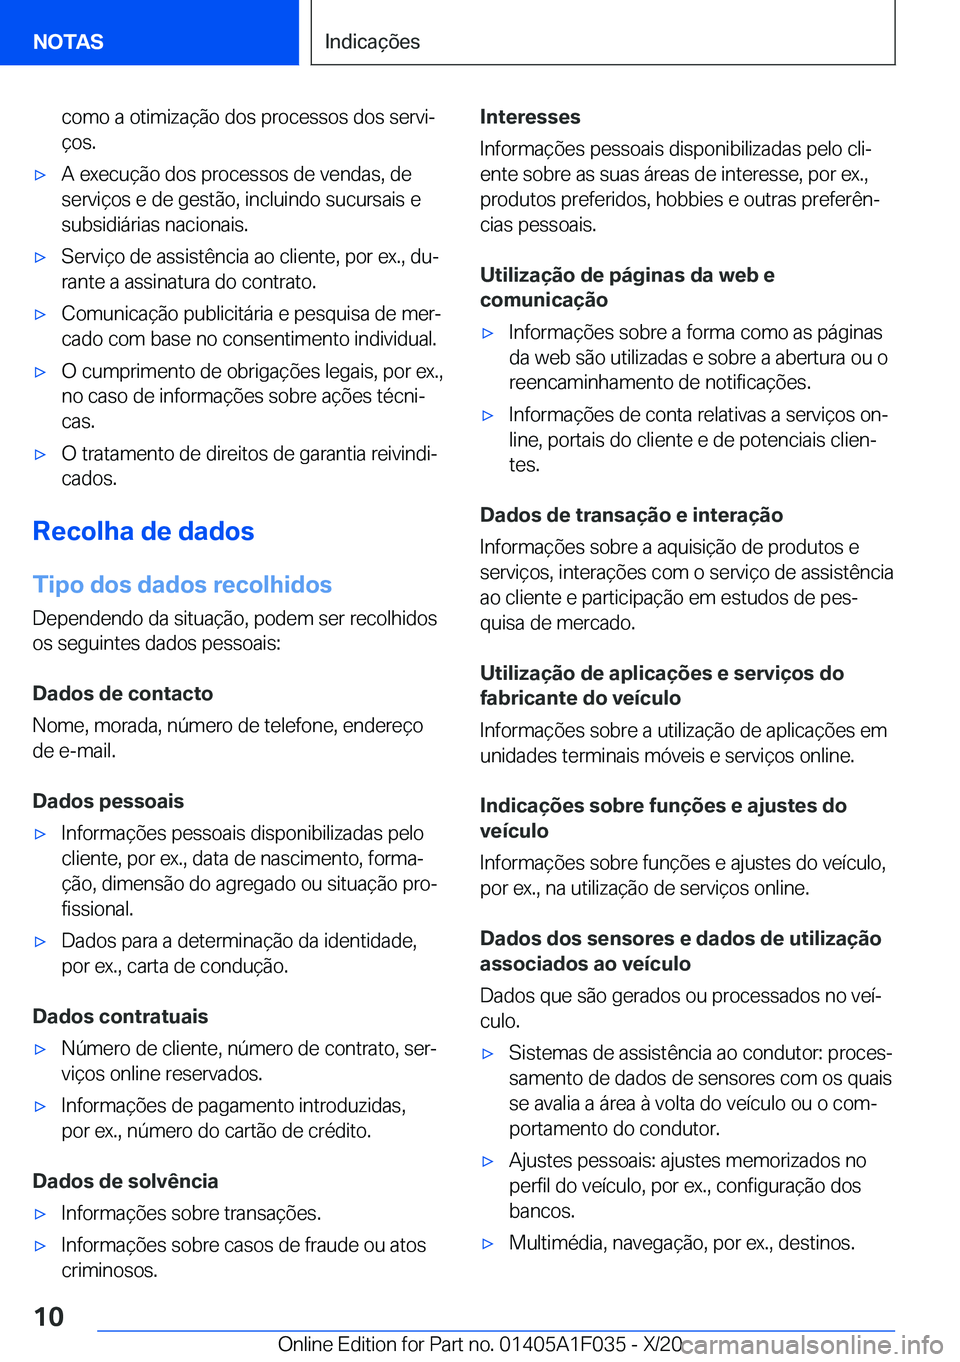 BMW X1 2021  Manual do condutor (in Portuguese) �c�o�m�o��a��o�t�i�m�i�z�a�